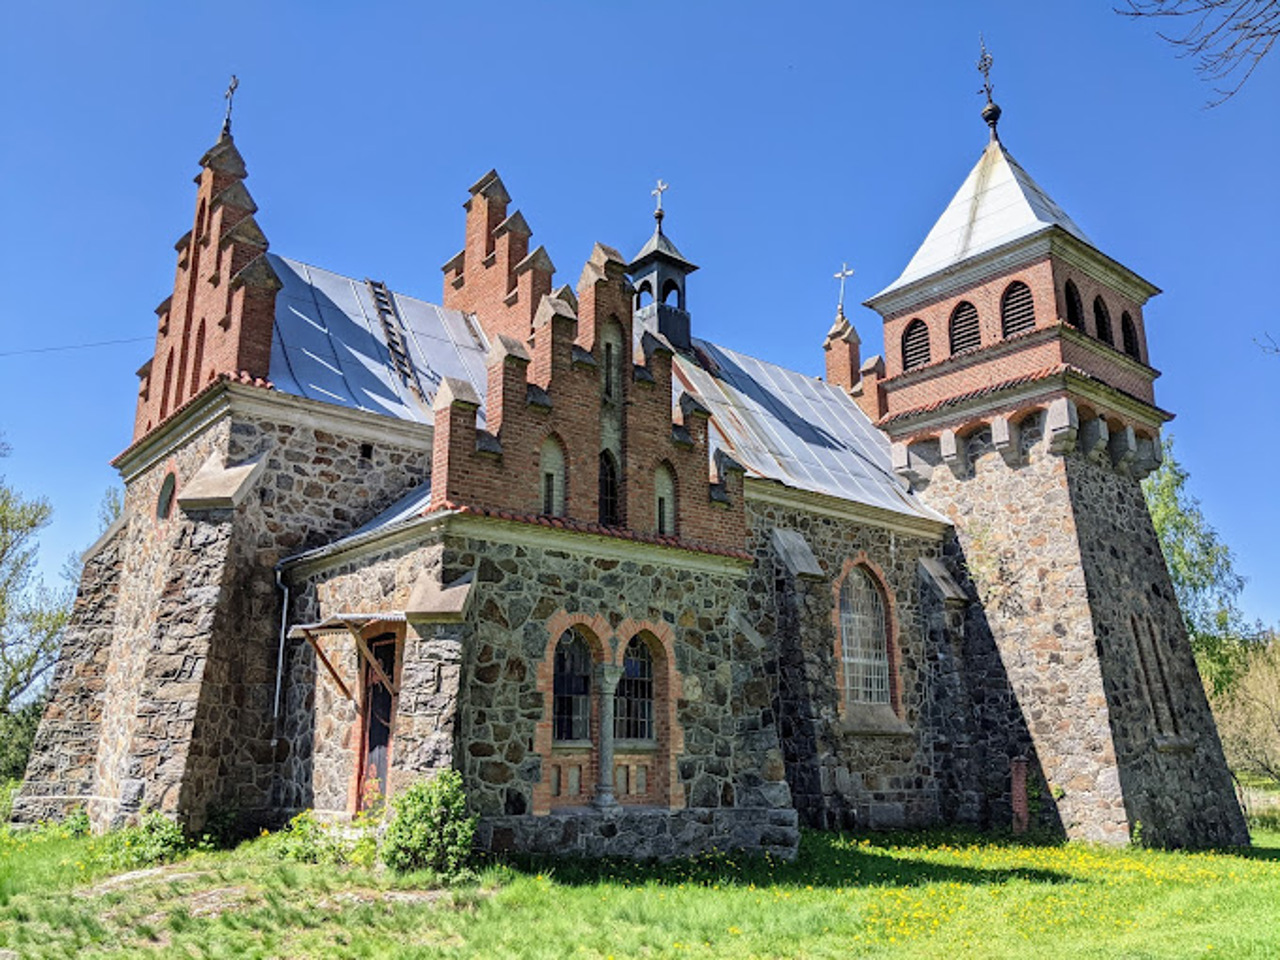 Saint Clare Church, Horodkivka